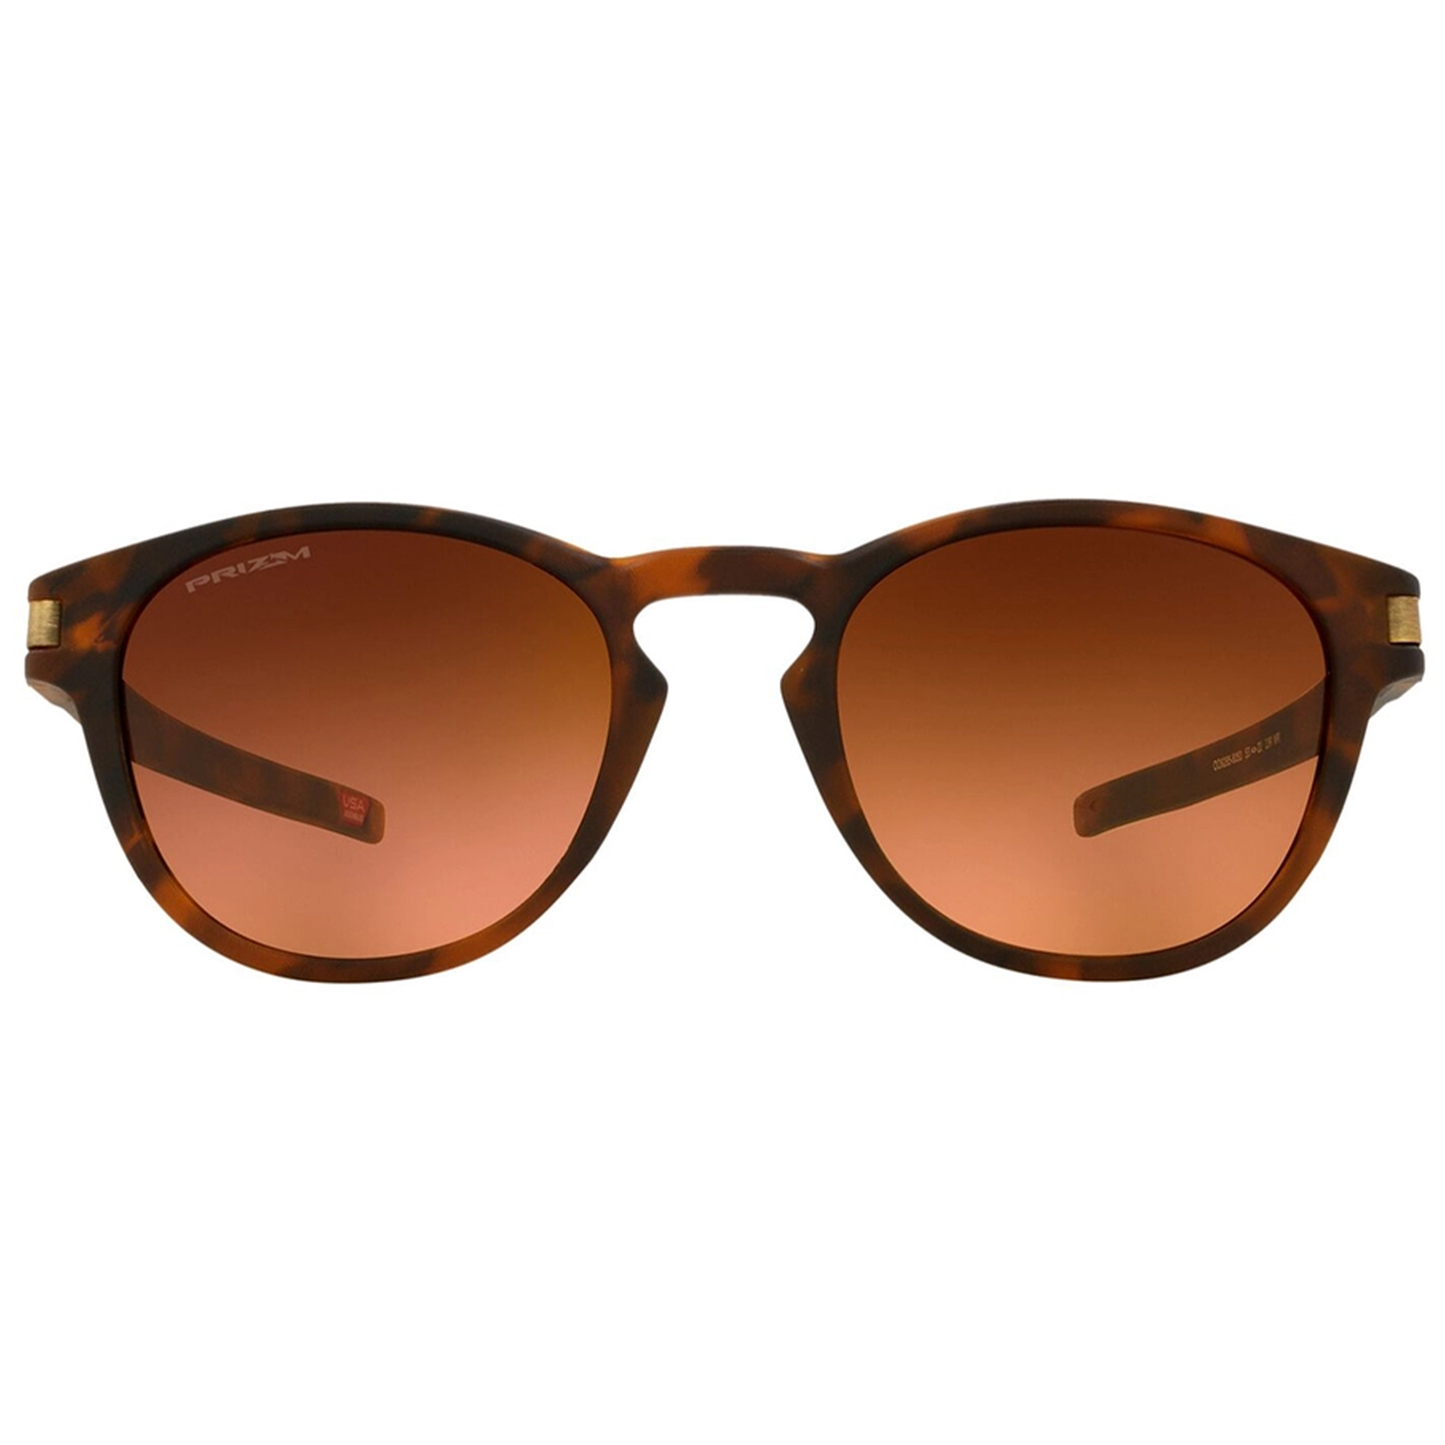 Oakley Latch Sunglasses (Matte Brown Tortoise) Prizm Brown Gradient Lens - Free Case